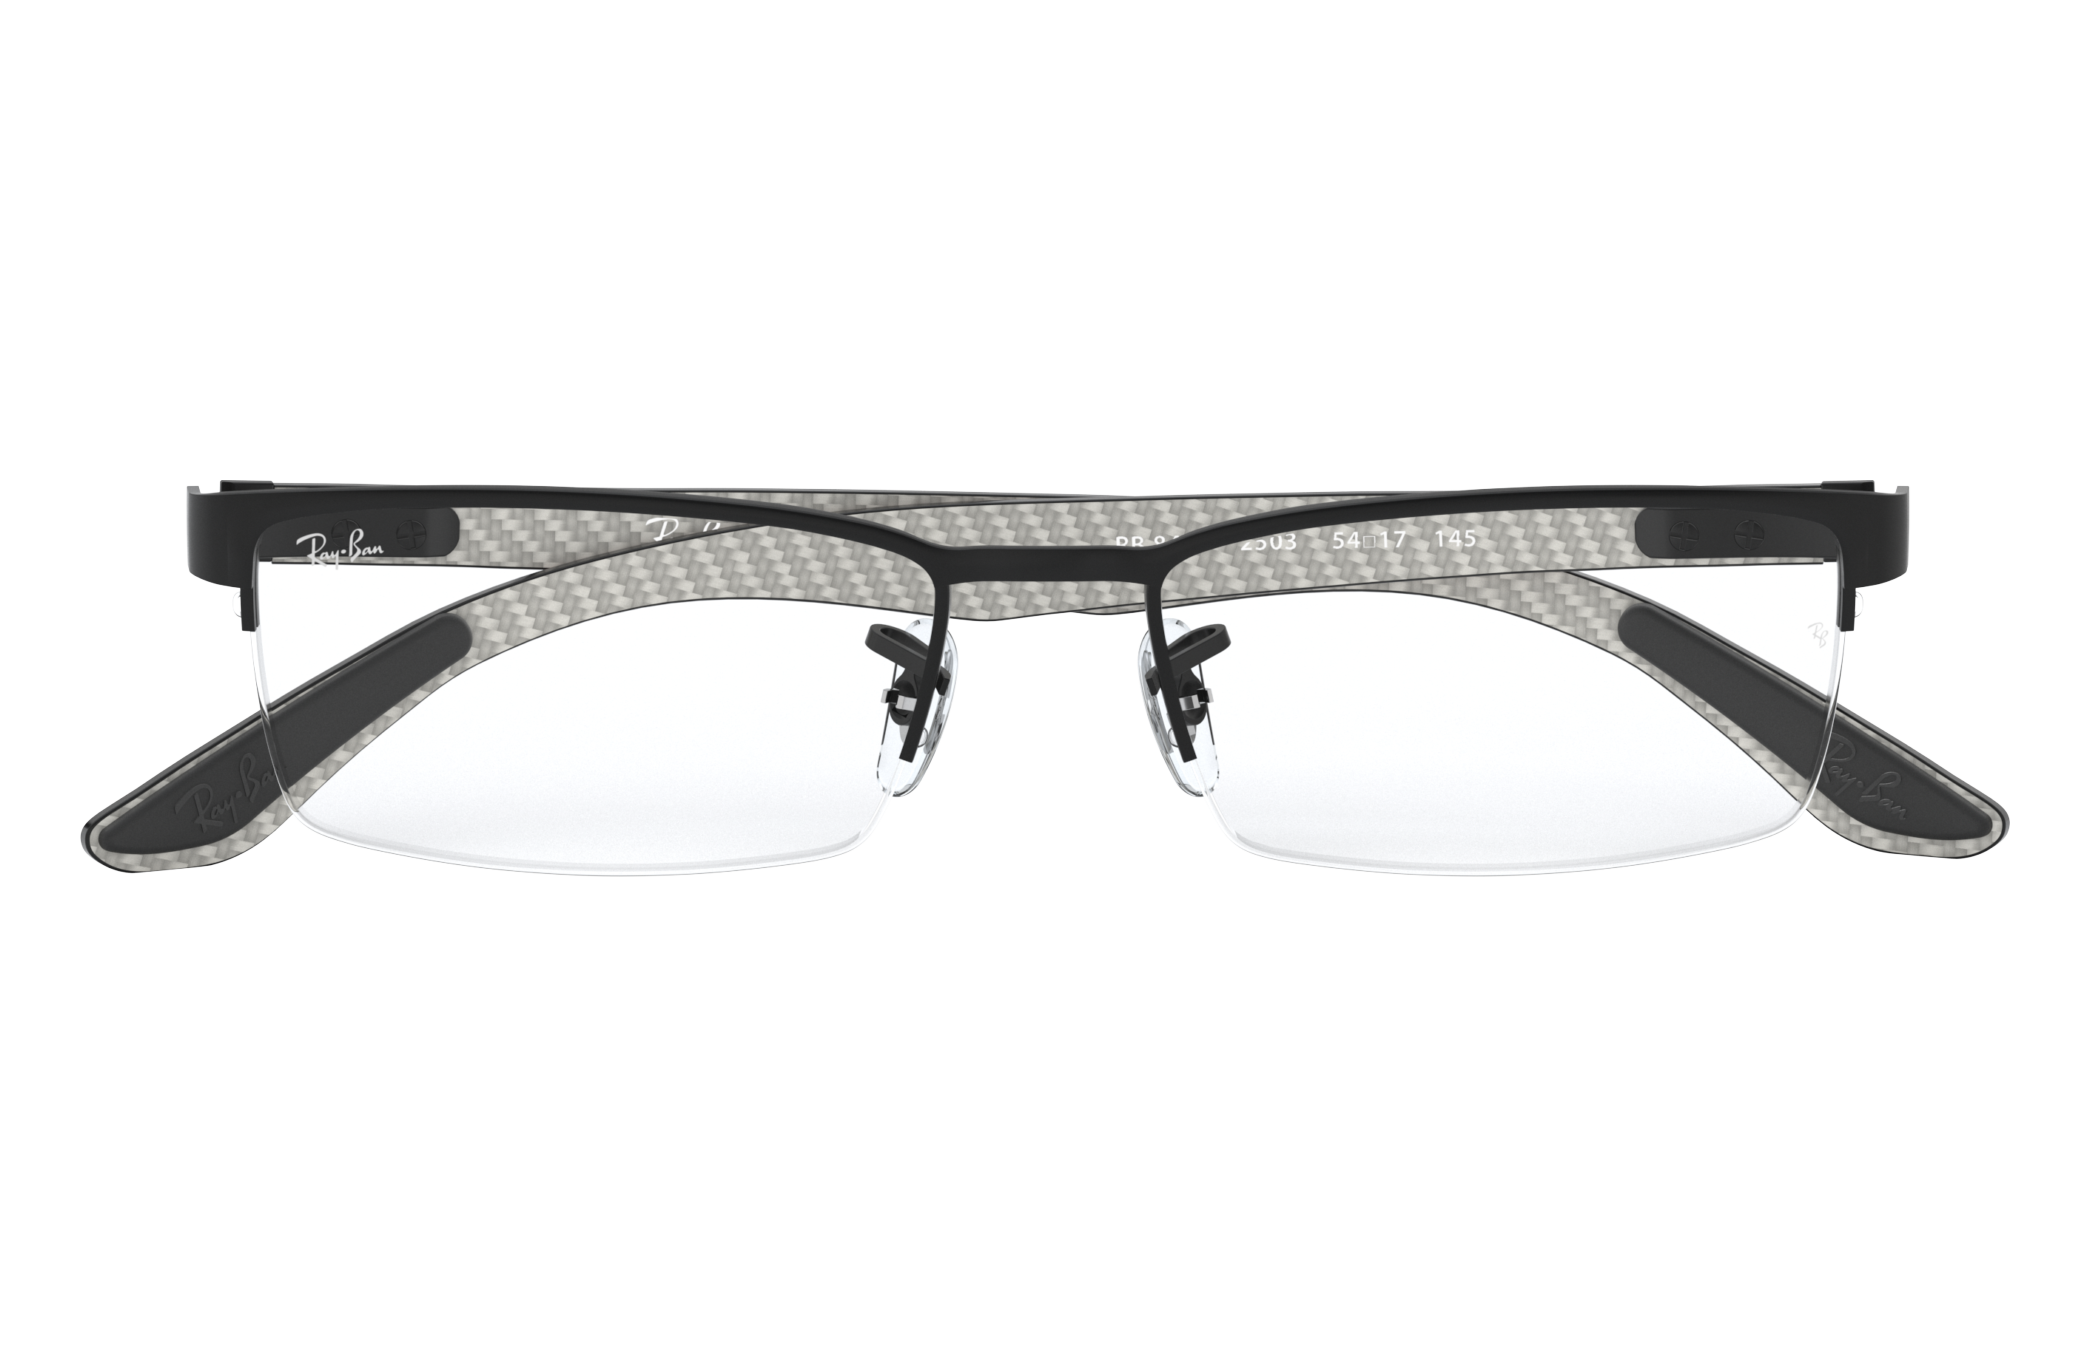 ray ban rx8412 carbon fibre eyeglasses